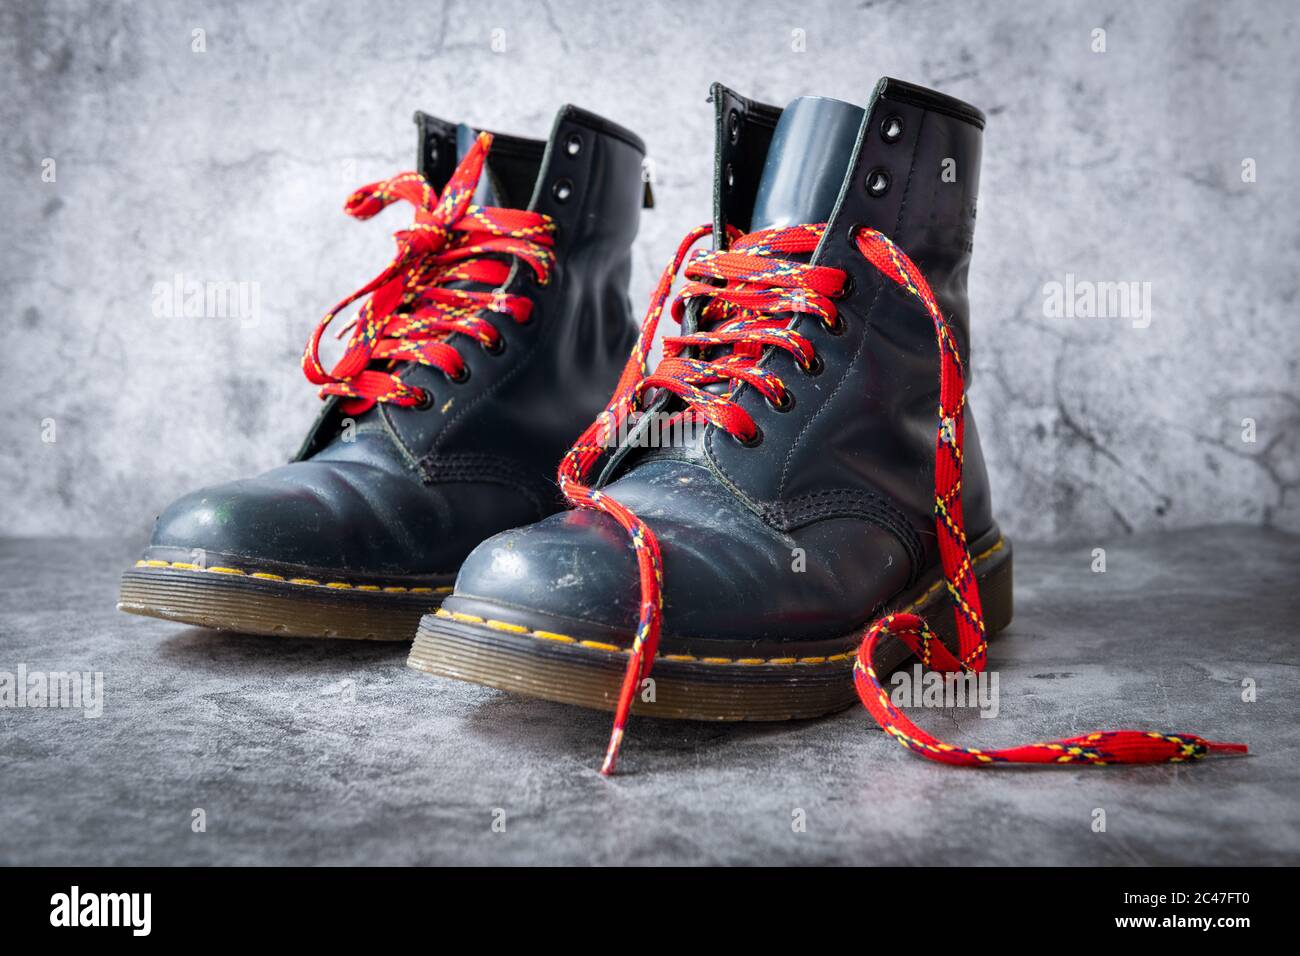 Red shoe laces -Fotos und -Bildmaterial in hoher Auflösung – Alamy